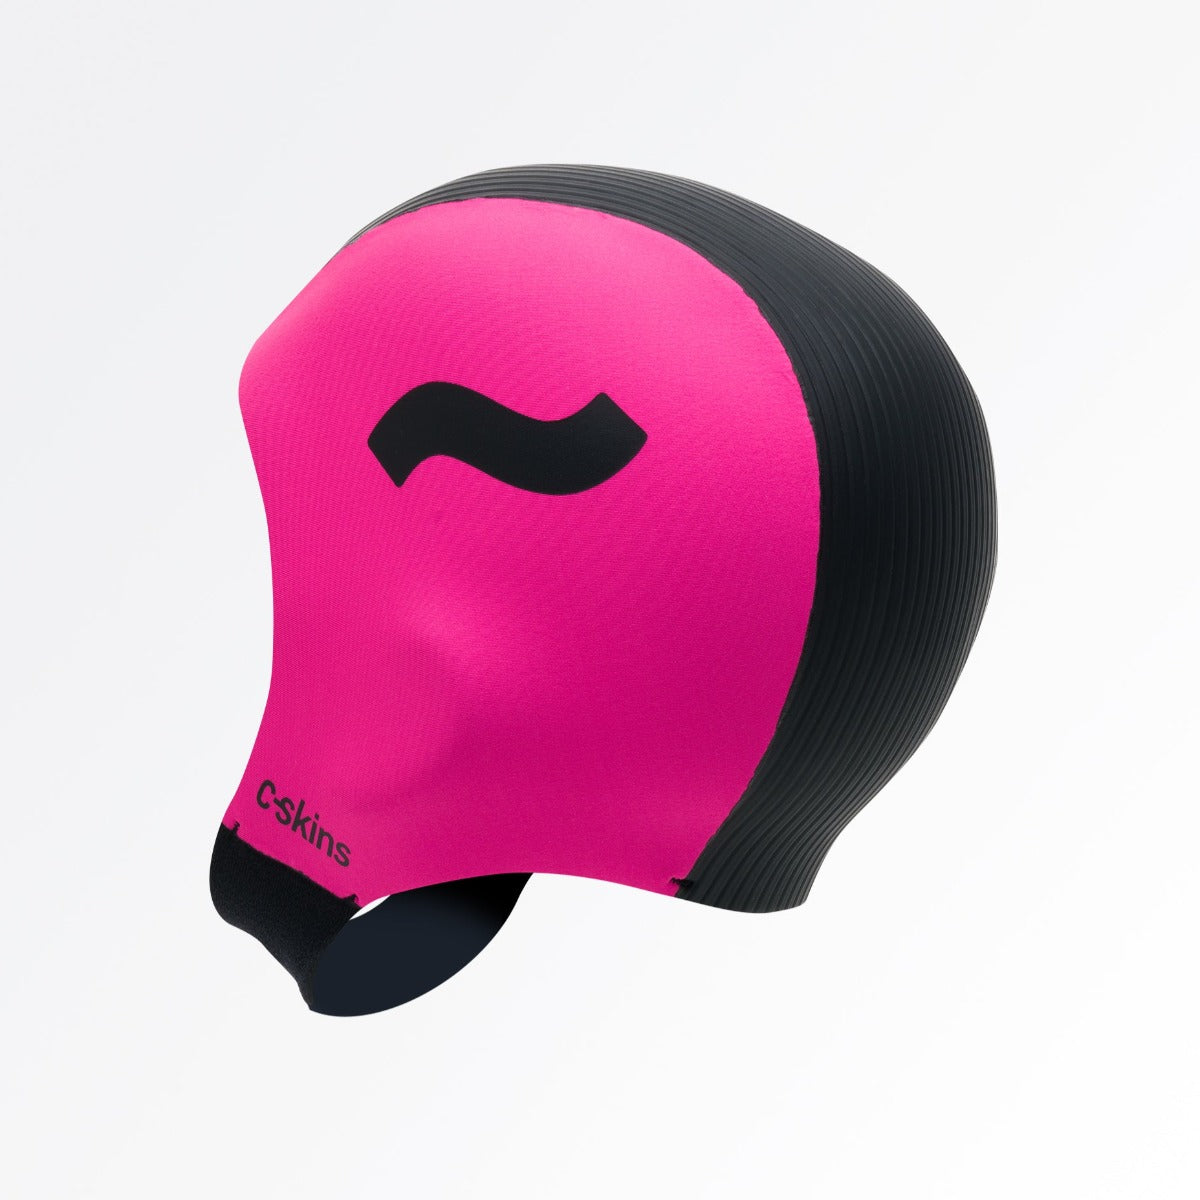 c-skins-swim-research-cap-freedom-swimming-insulation-pink-galway-ireland-blacksheepsurfco-pink-side-back